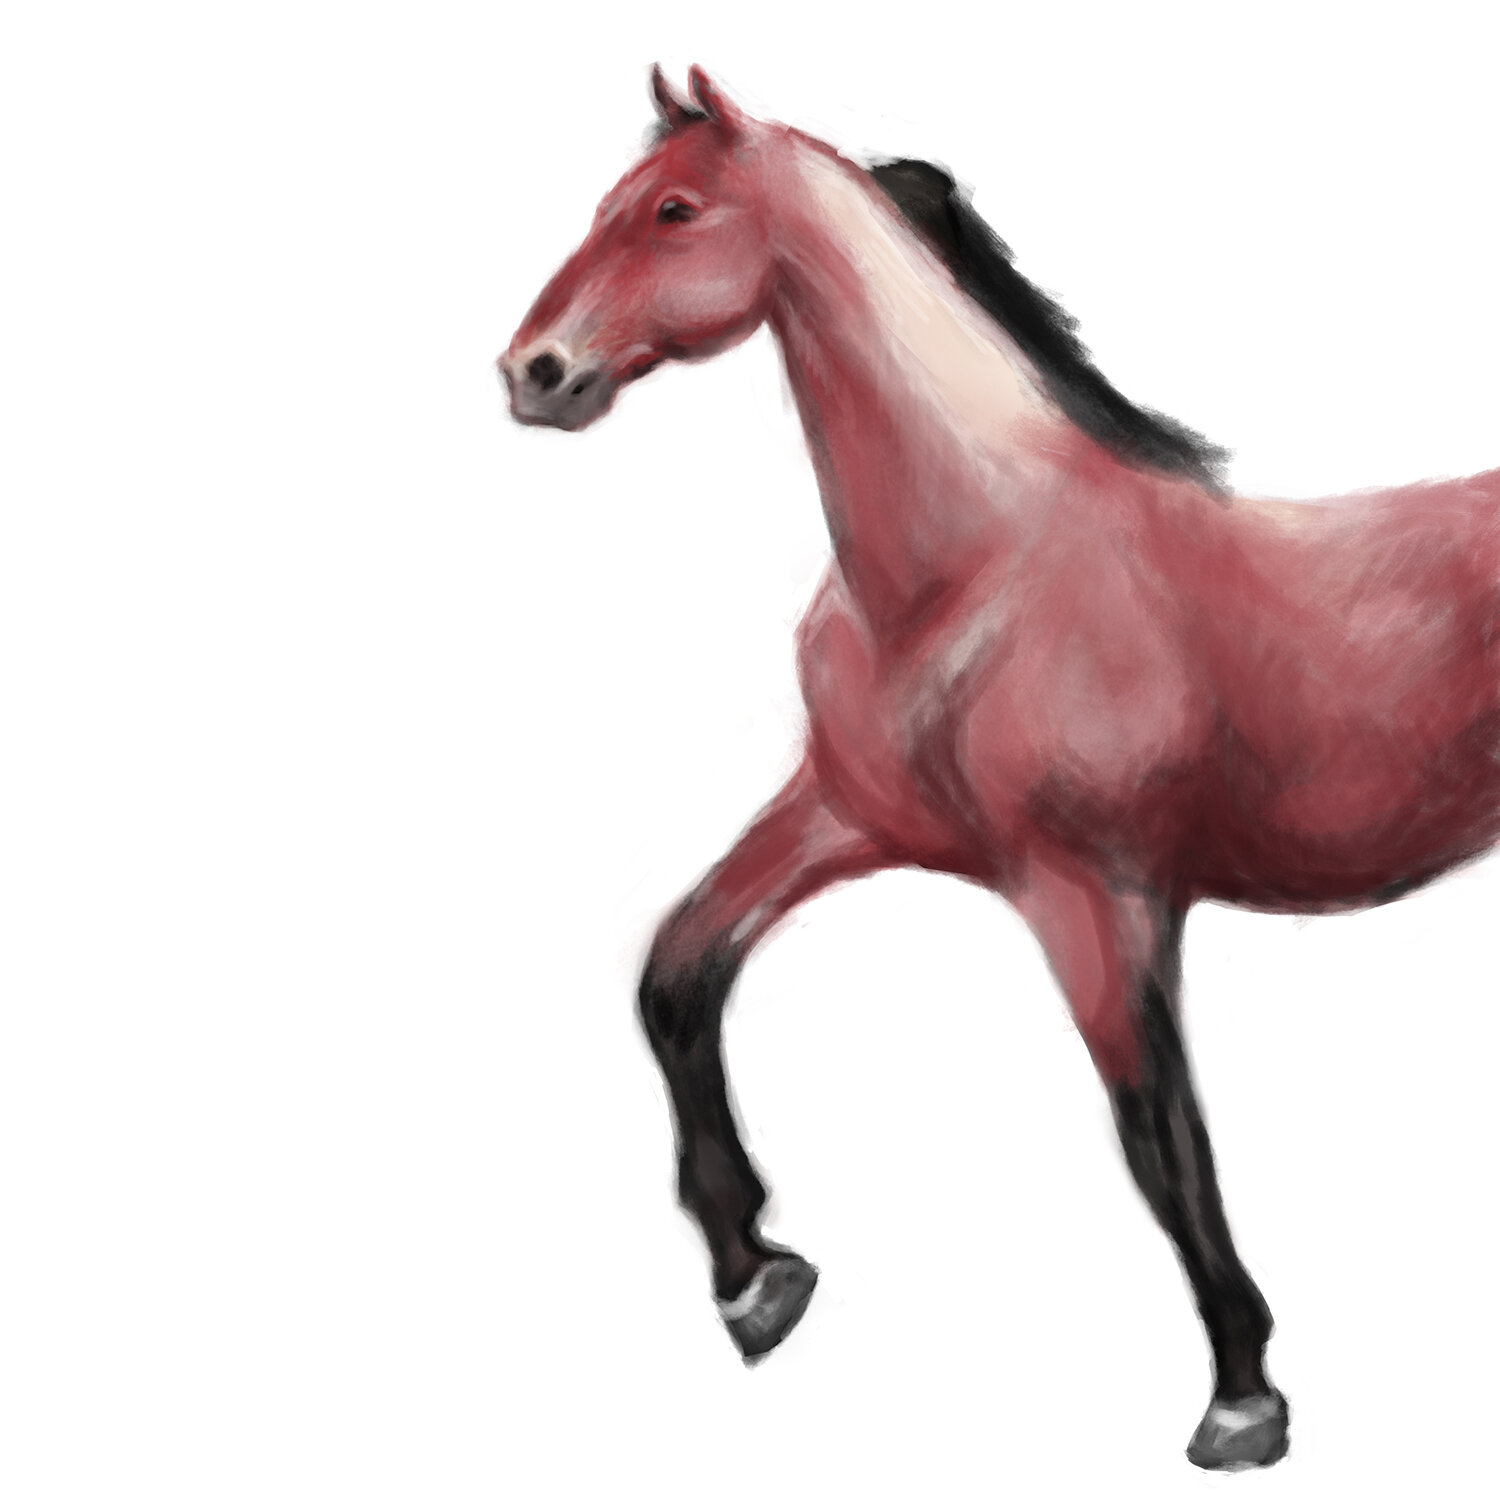 gallegos_anna_horse_painting_art270_optimized.jpg